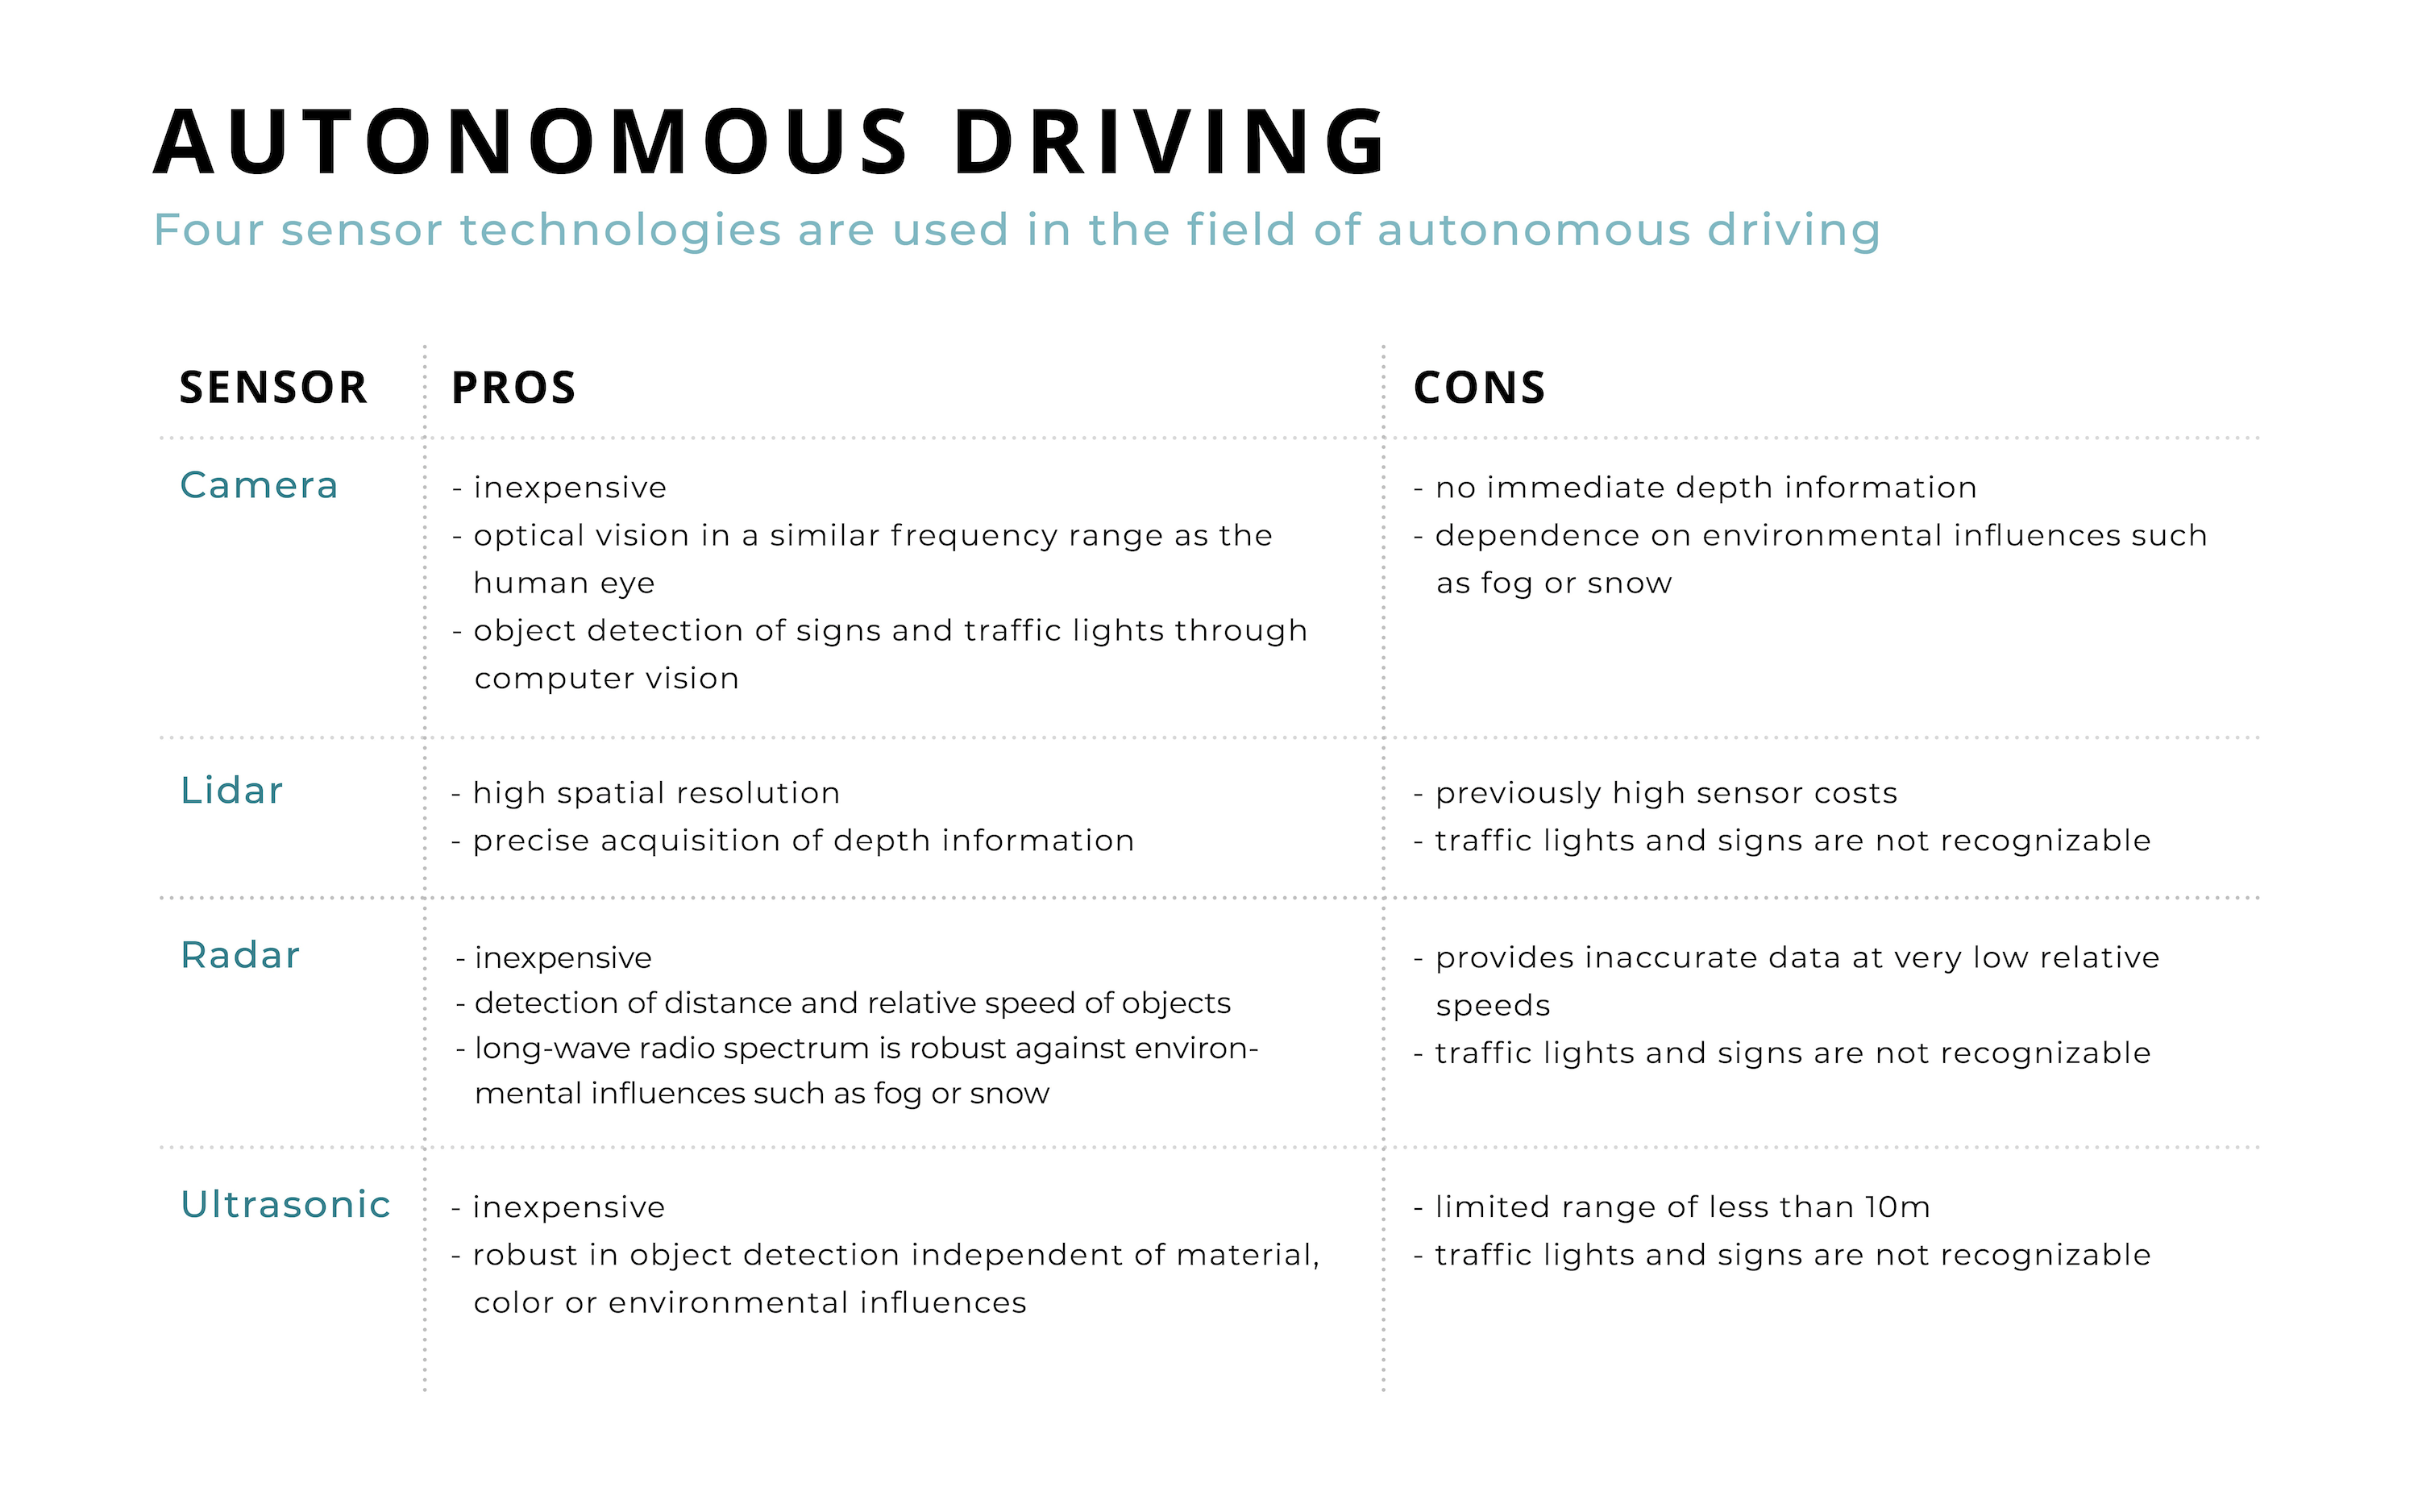 Sensors used in Autonomous Driving